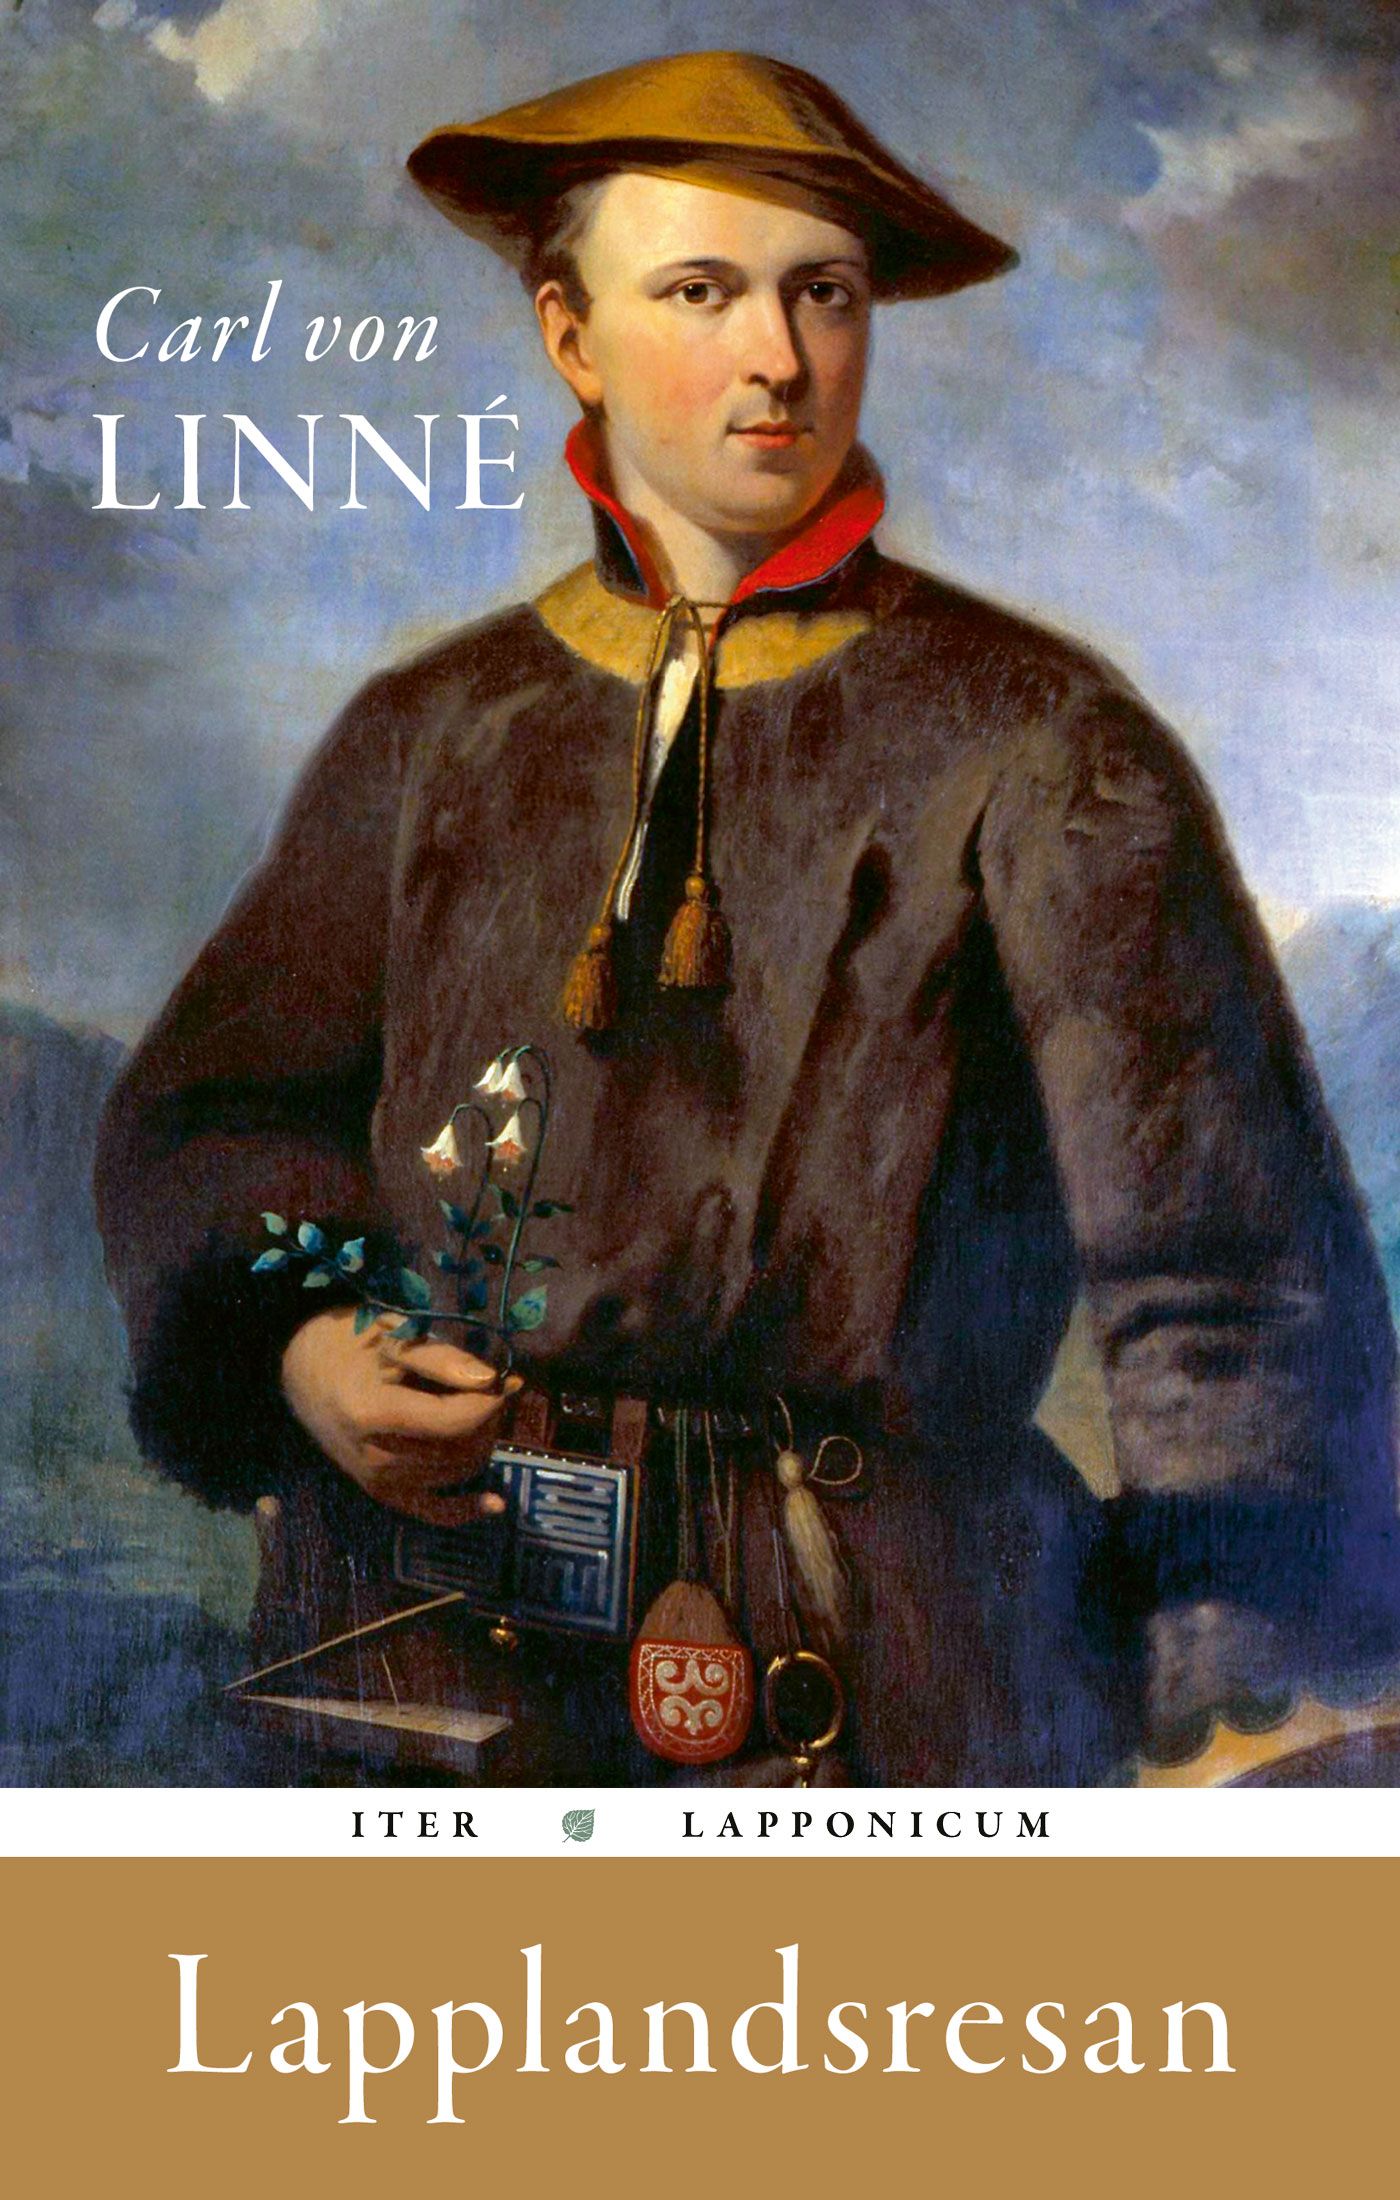 Lapplandsresan, eBook by Carl von Linné